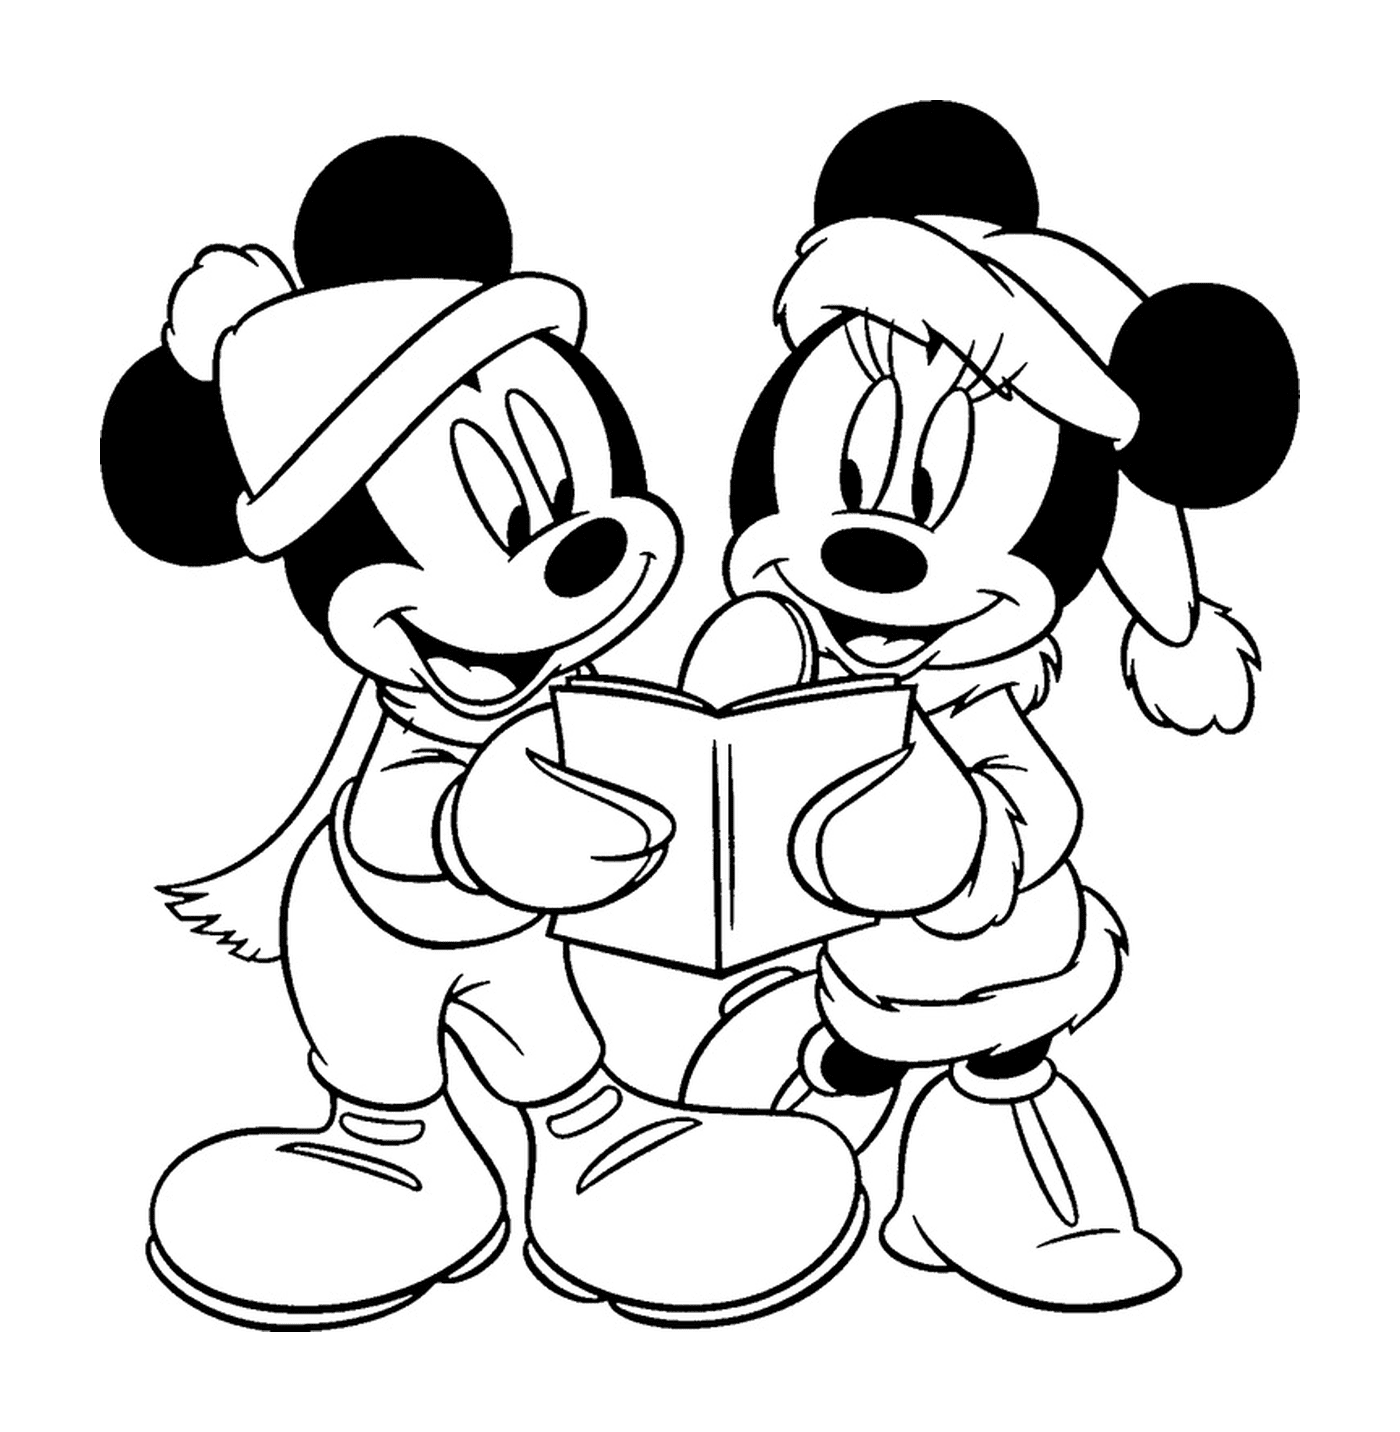  Mickey和Minnie读书 